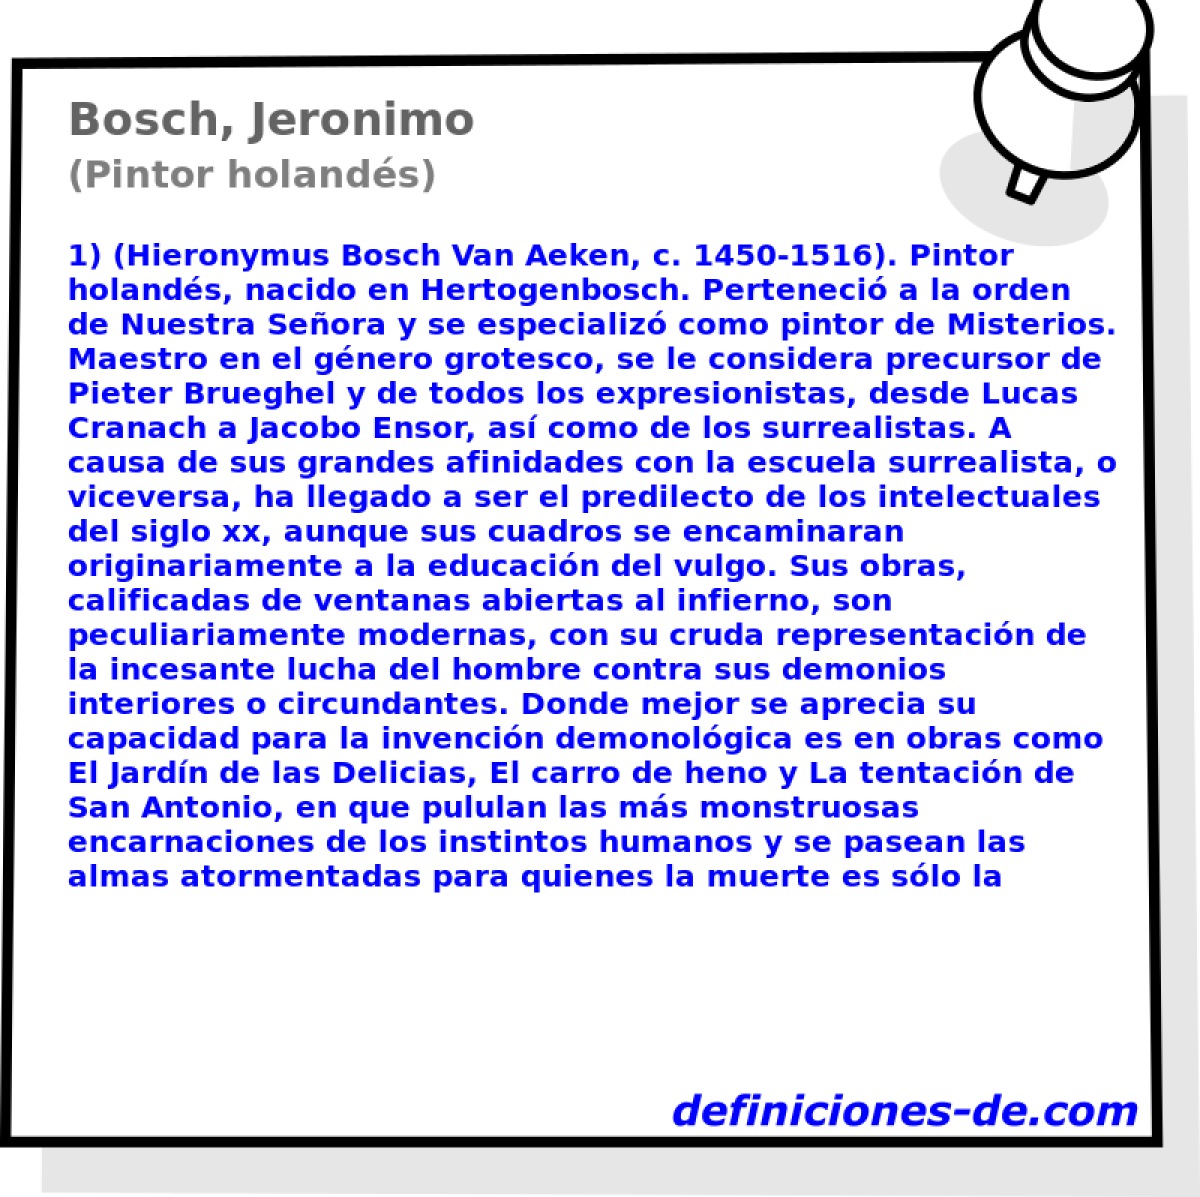 Bosch, Jeronimo (Pintor holands)